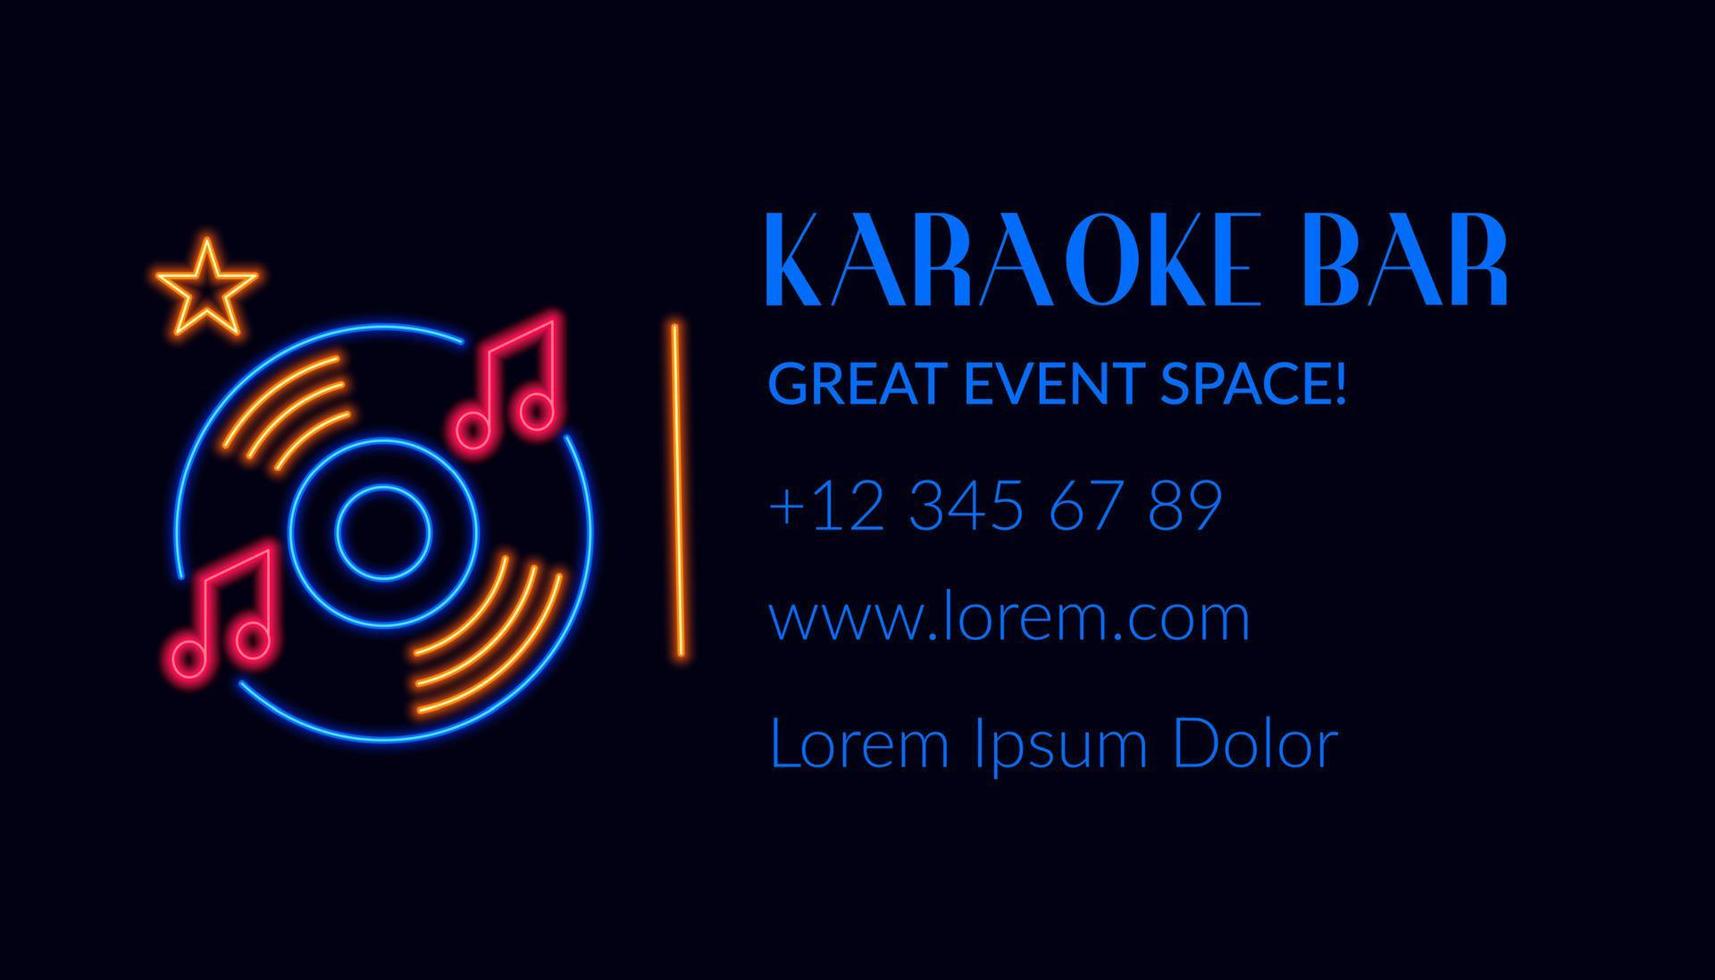 Karaoke bar, business card with logo and info vector